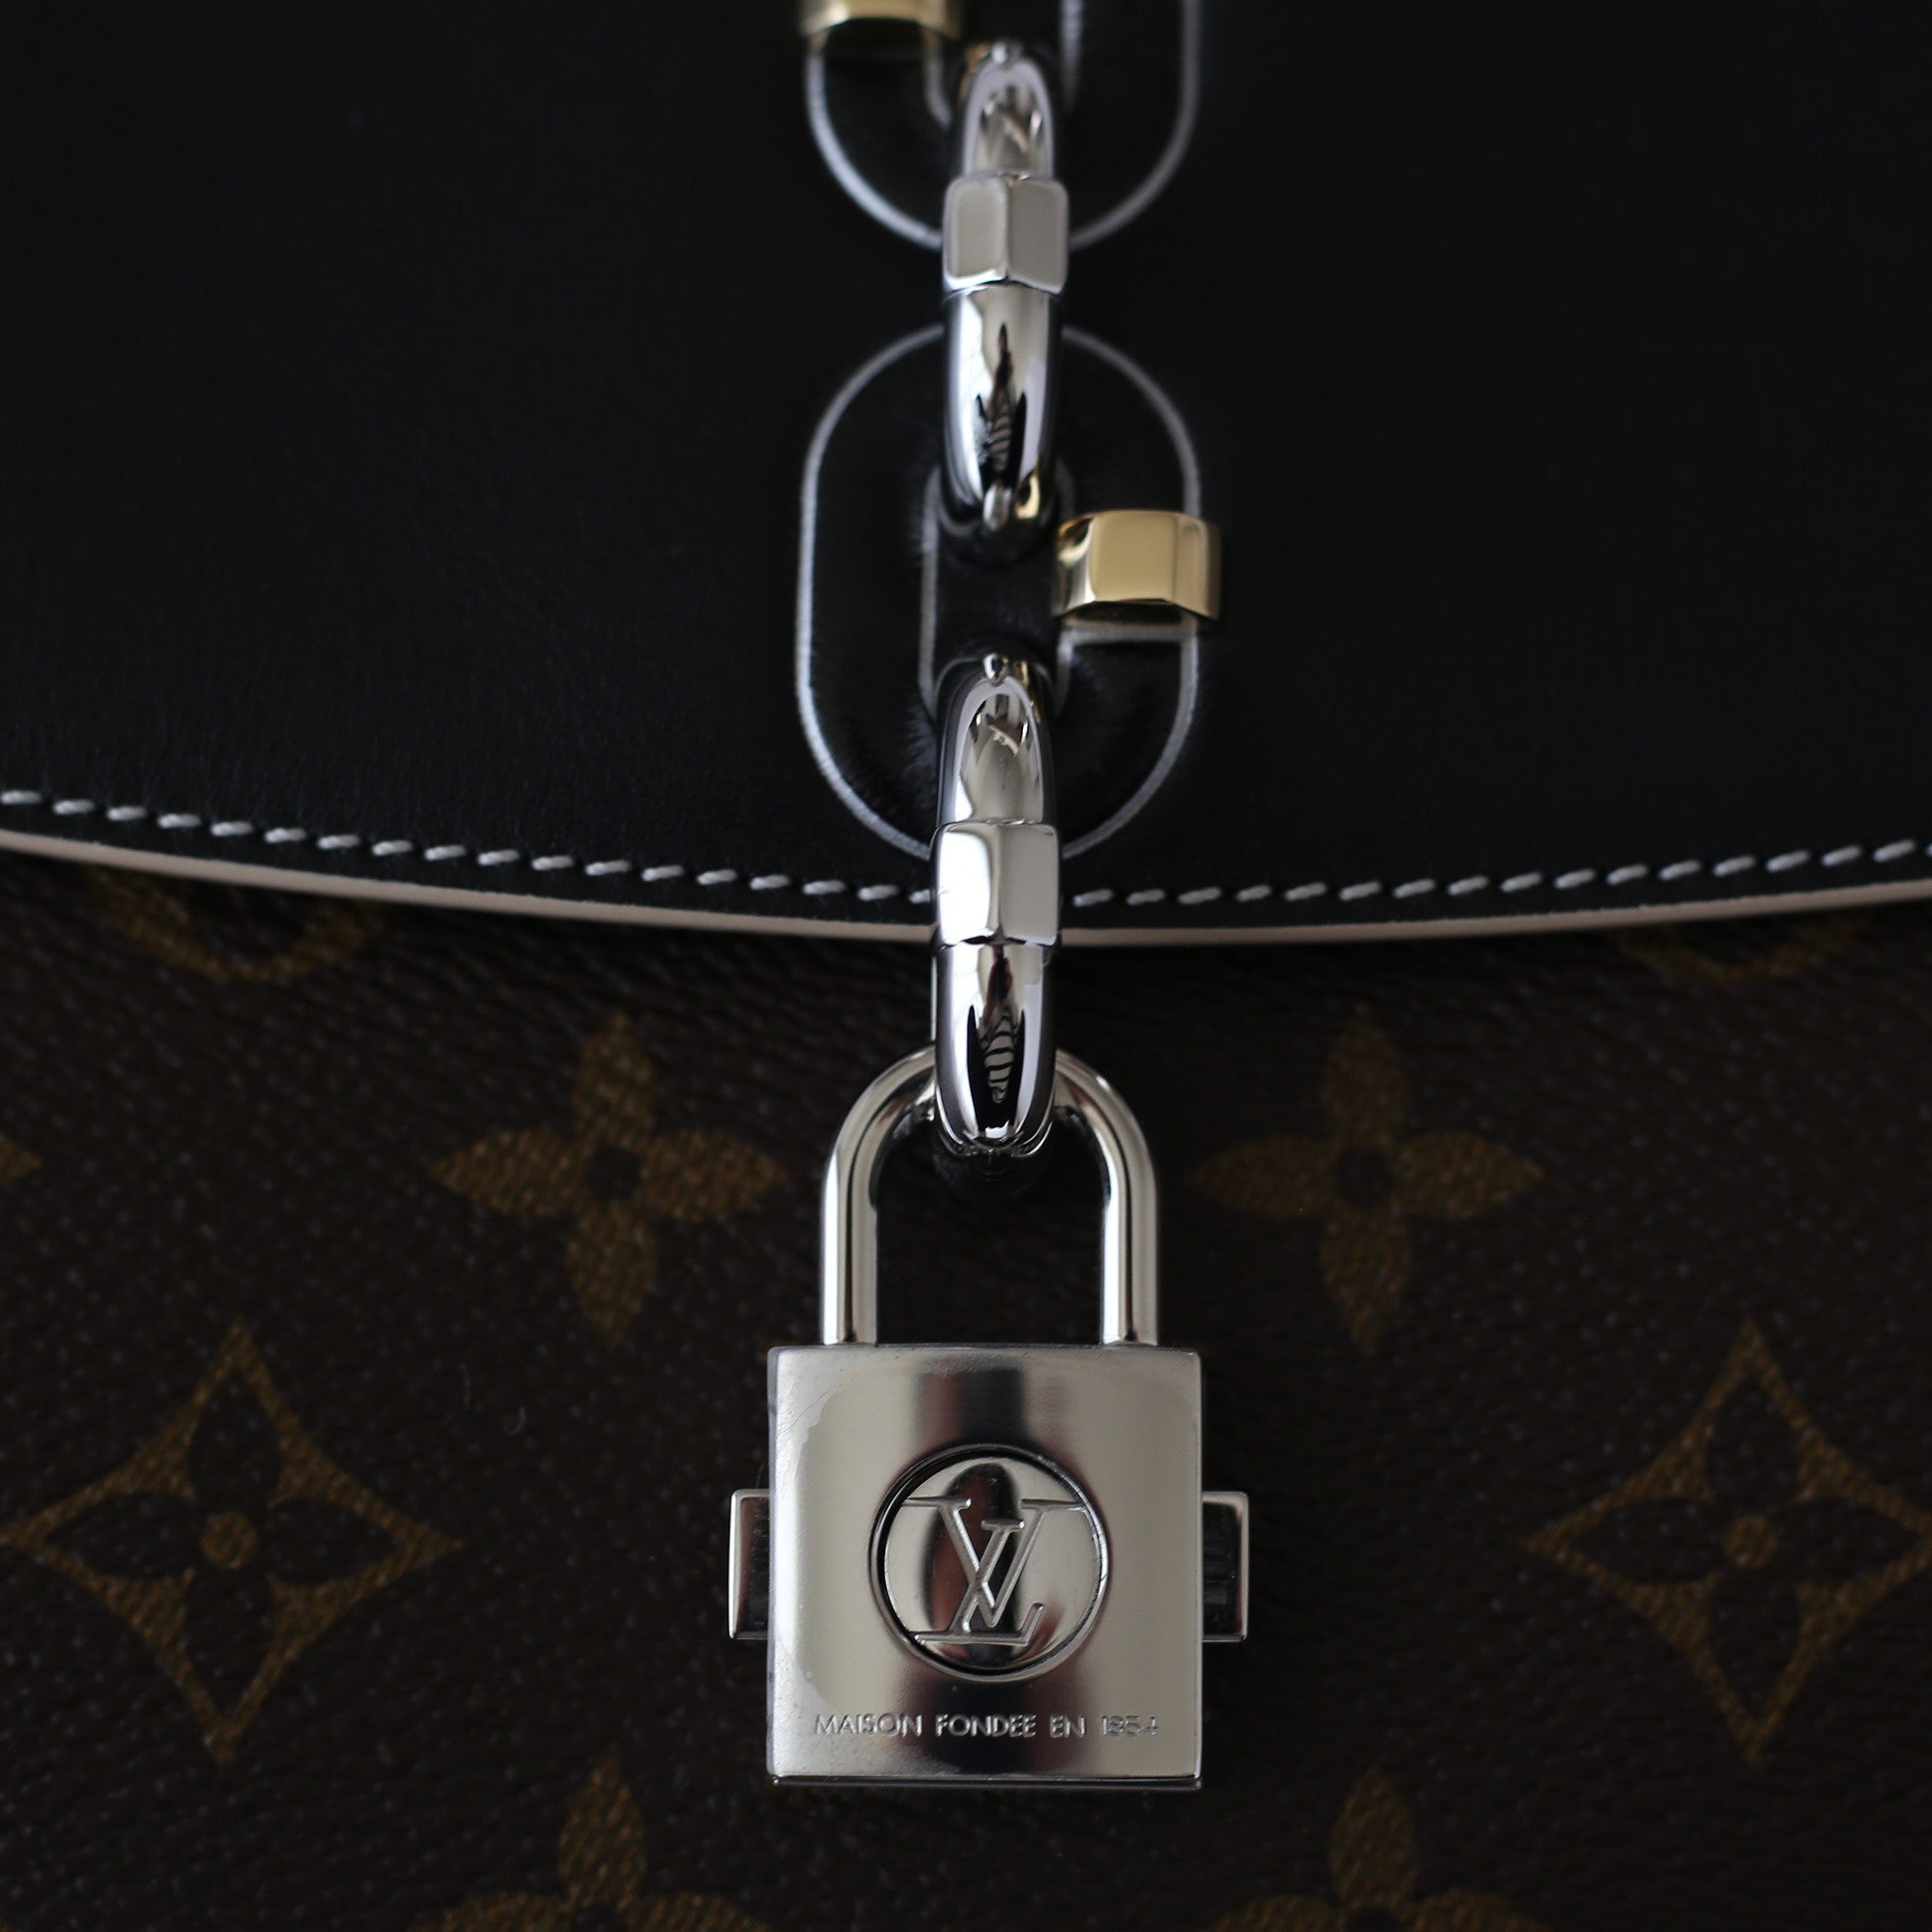 Introducing the Louis Vuitton Chain It Bag - PurseBlog